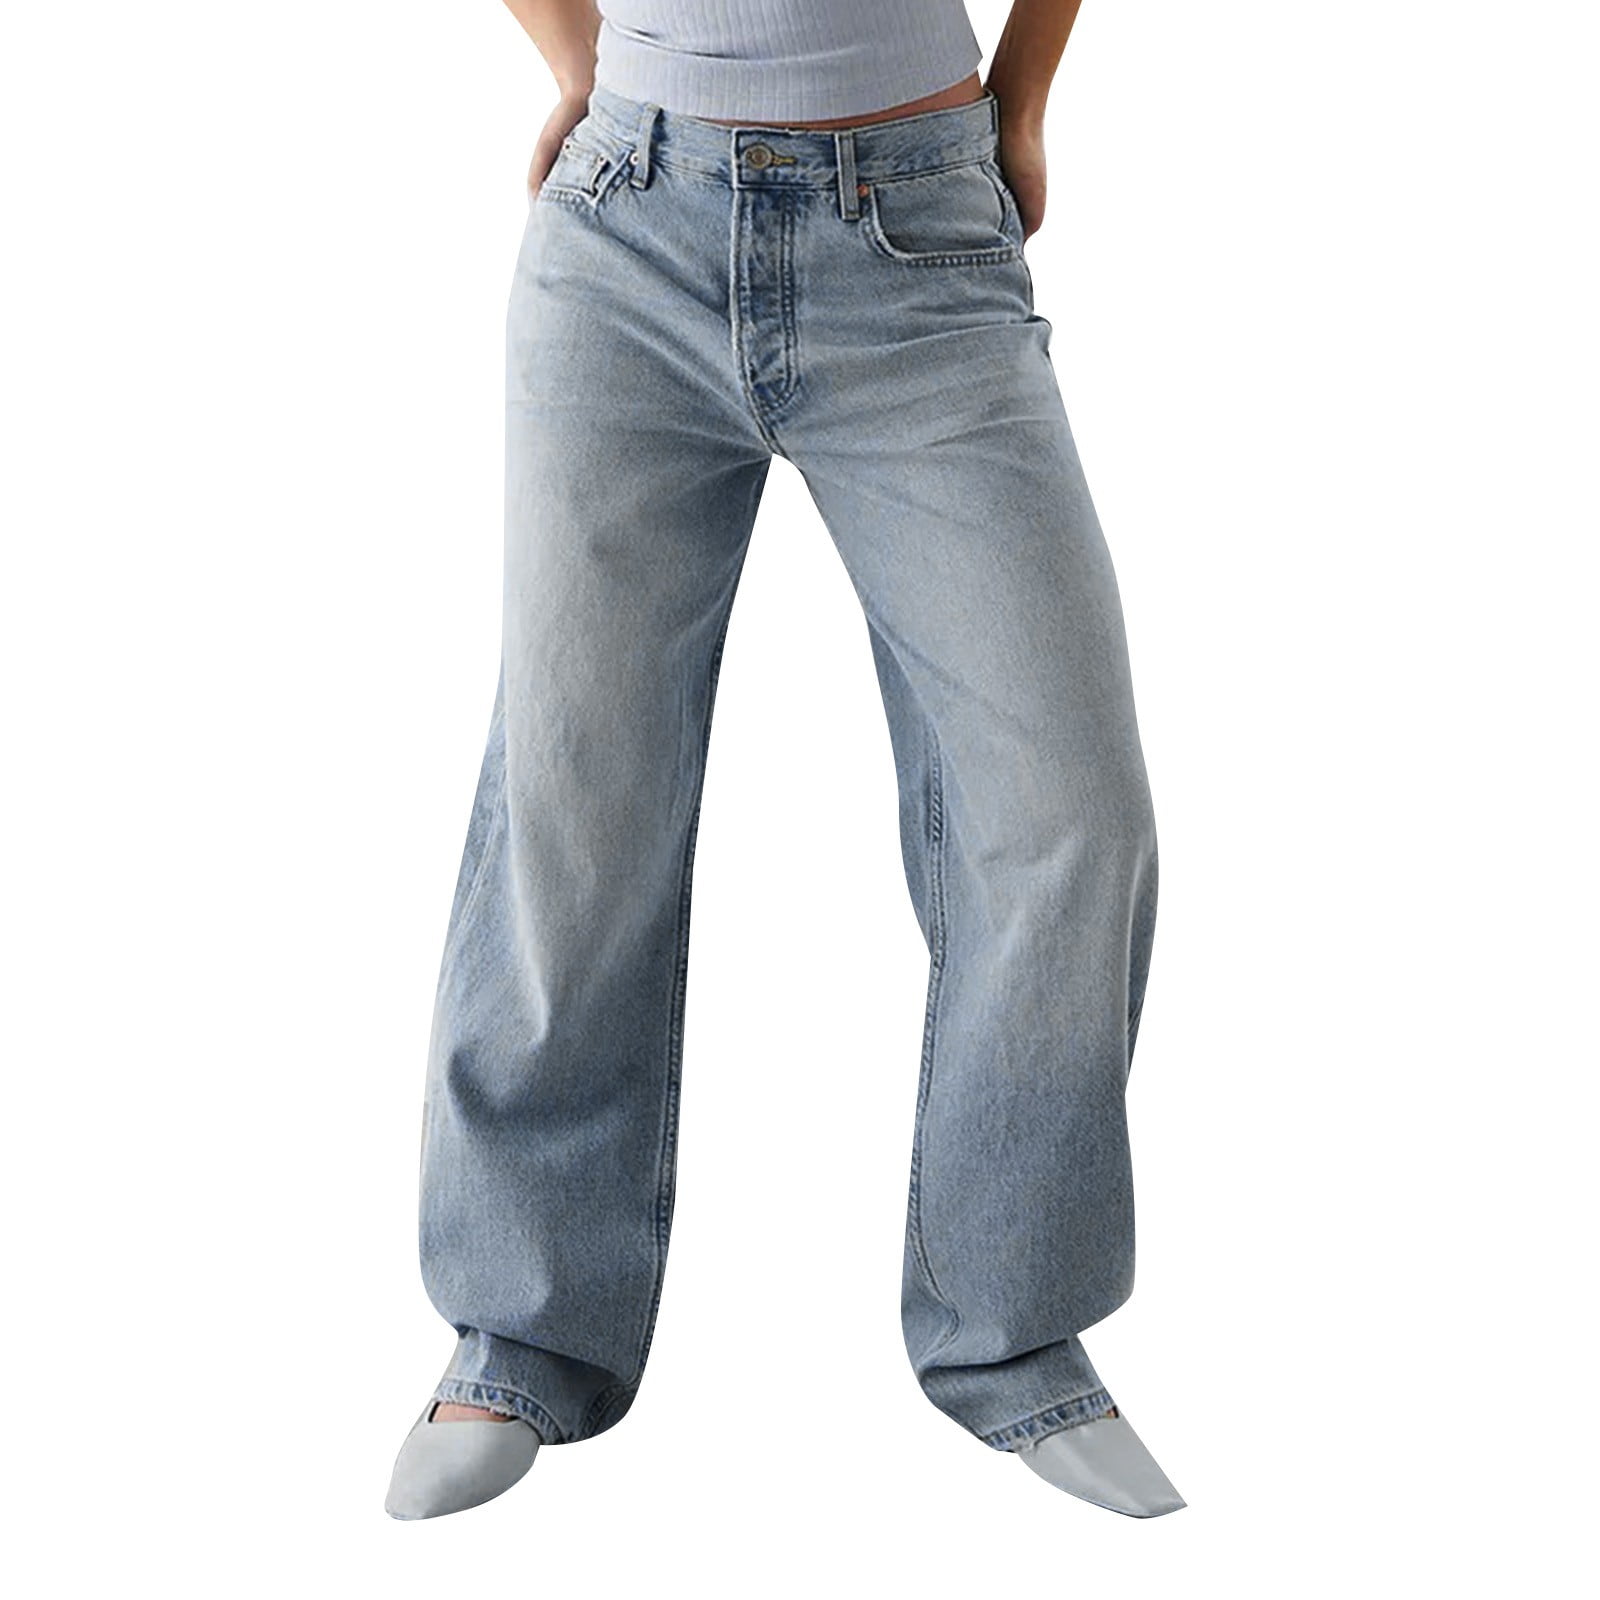 Jean Pants for Women Ripped Woman on Pants Women's Jeans Light Straight Trousers 36 Inseam Womens Pants - Walmart.com